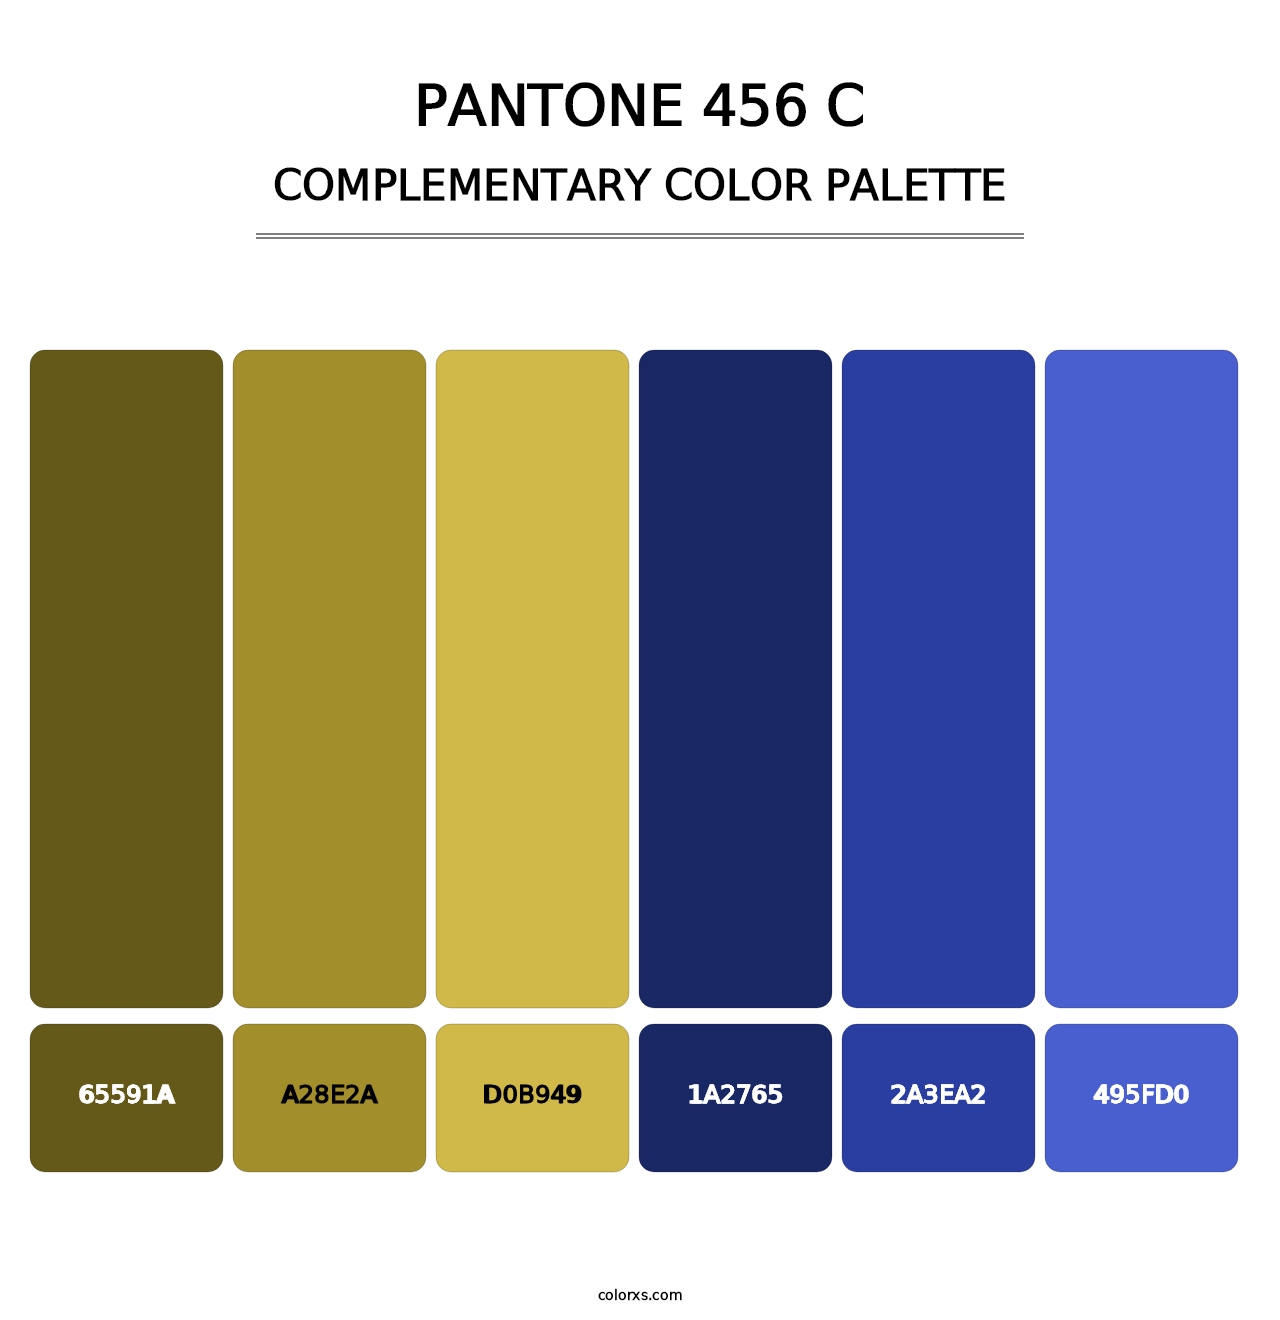 PANTONE 456 C - Complementary Color Palette